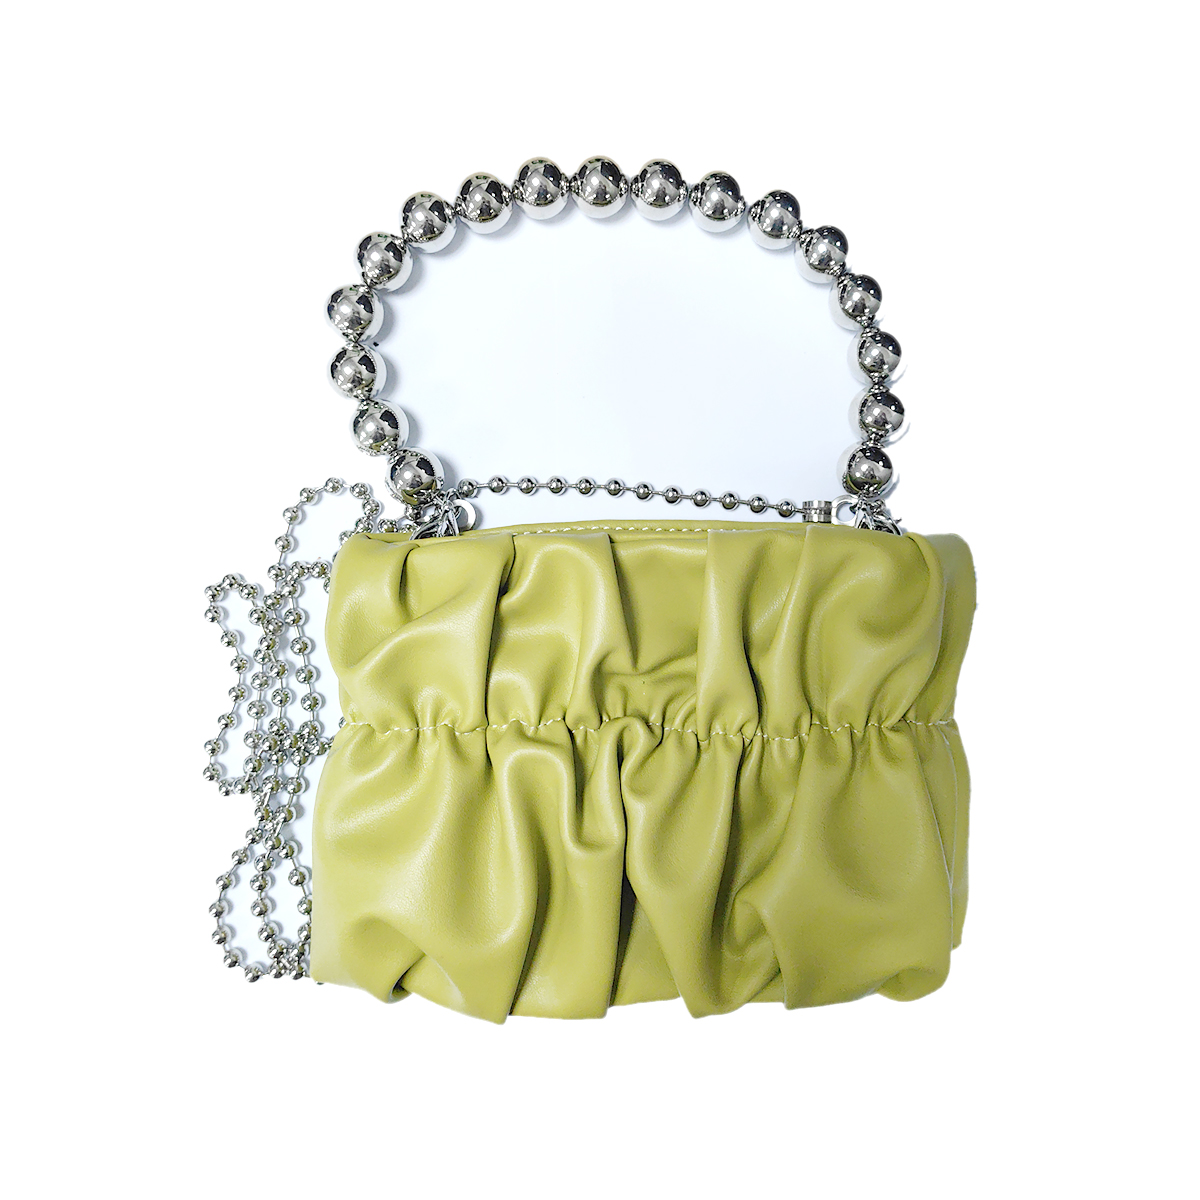 Pleated chain handbag